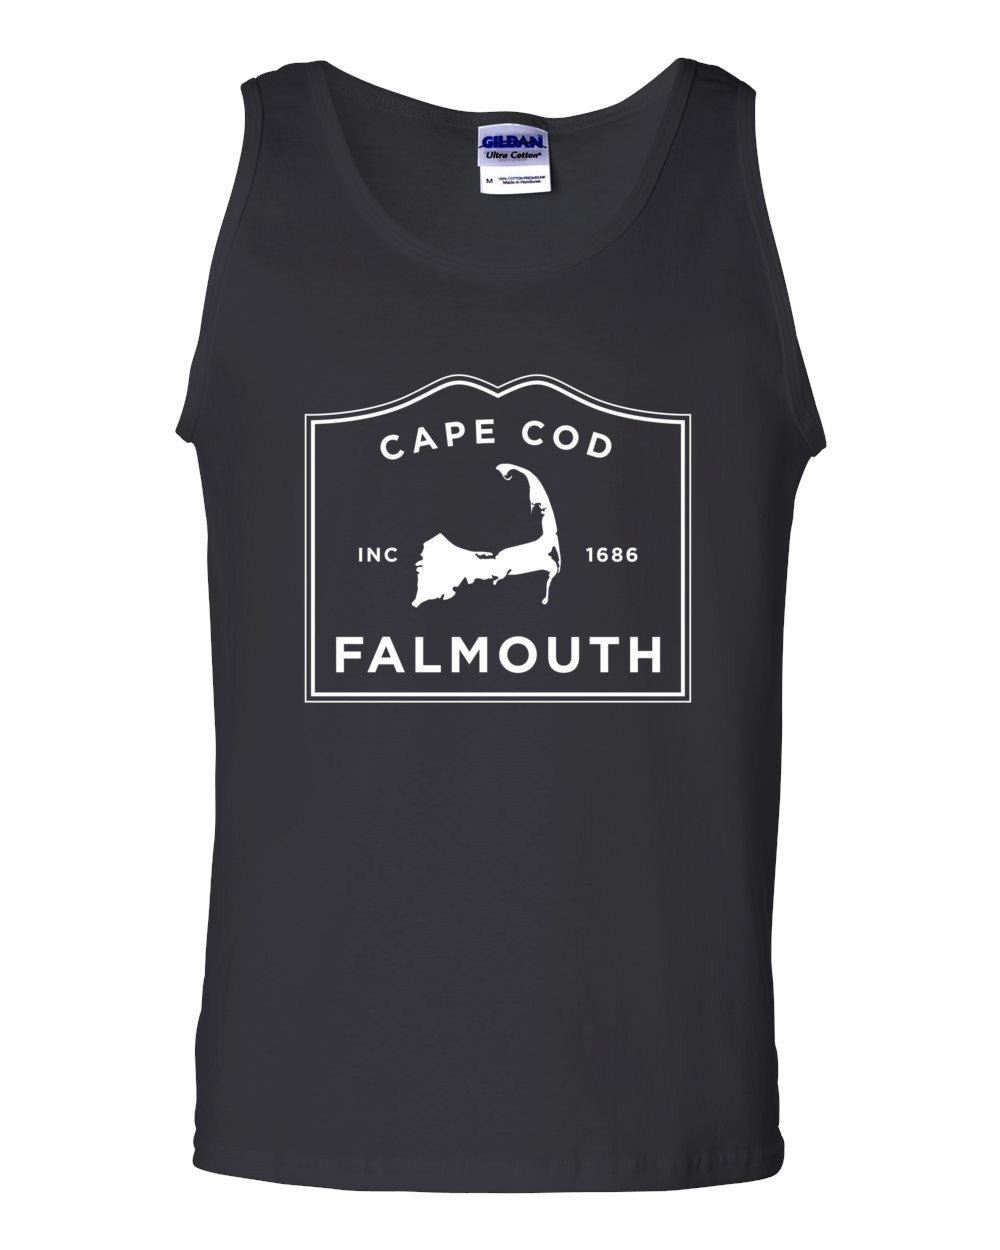 Falmouth Cape Cod Tank Top